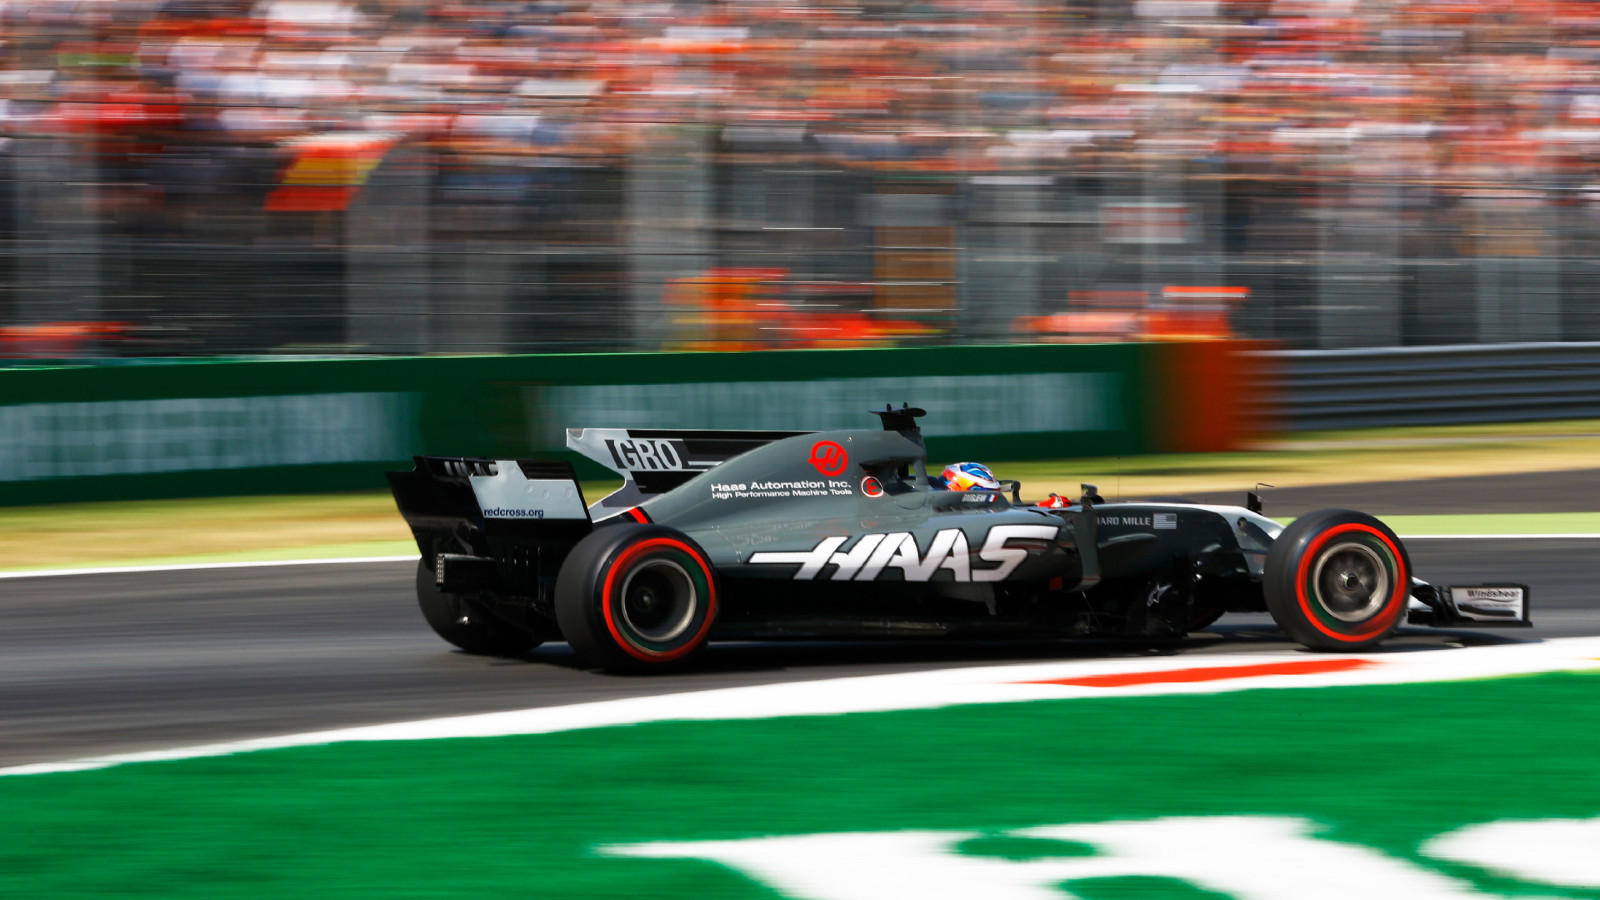 Romain Grosjean drives his Haas VF-17 at the 2017 Italian Grand Prix.